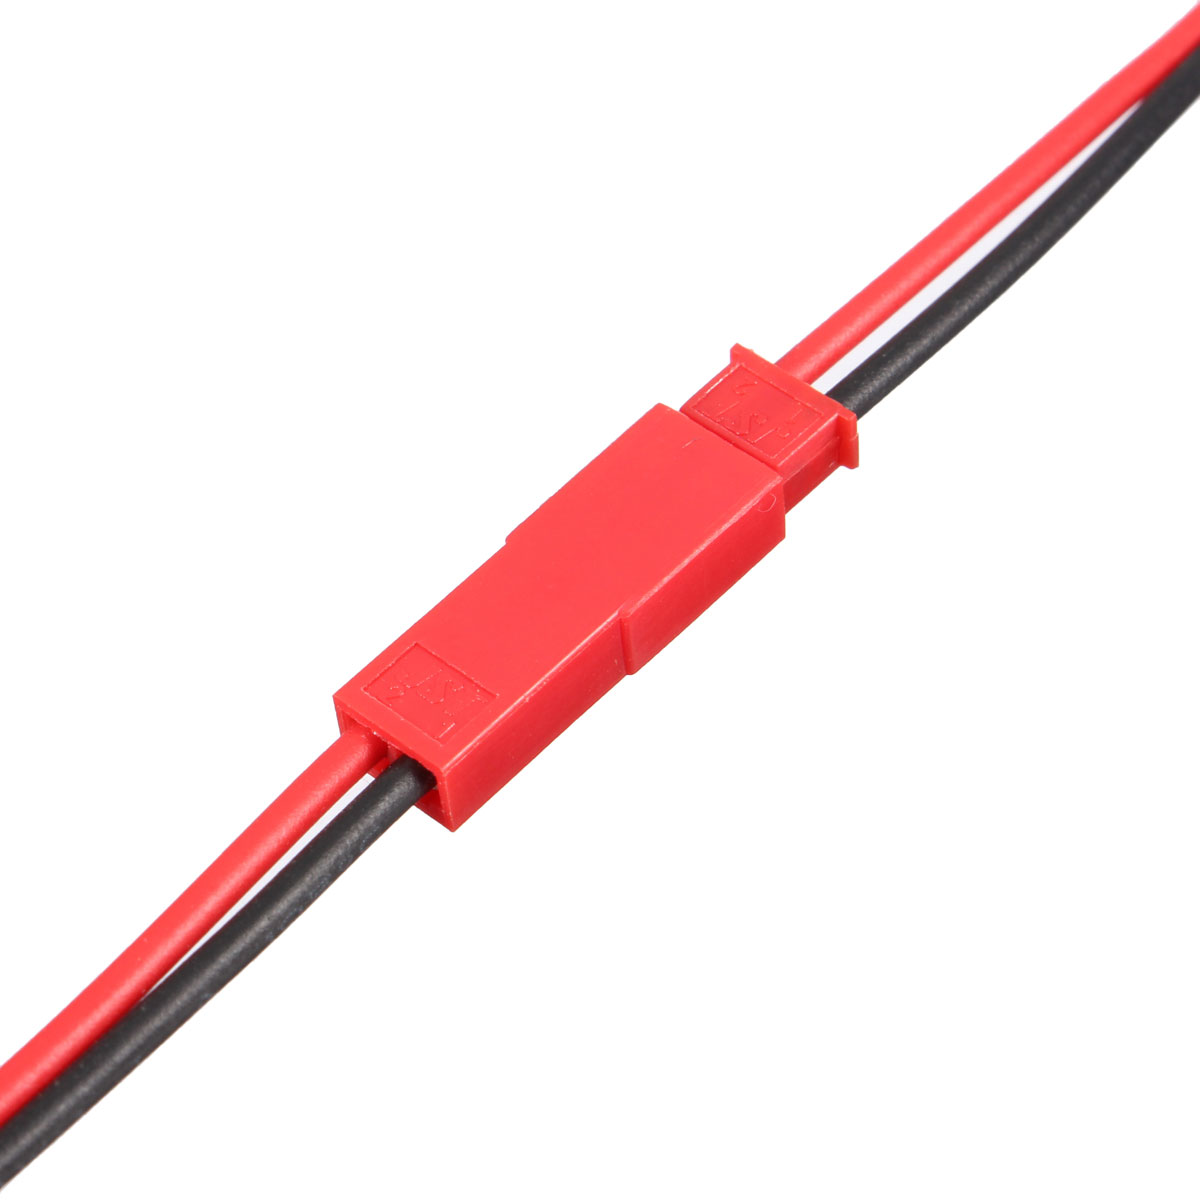 JST Connector Plug Cables